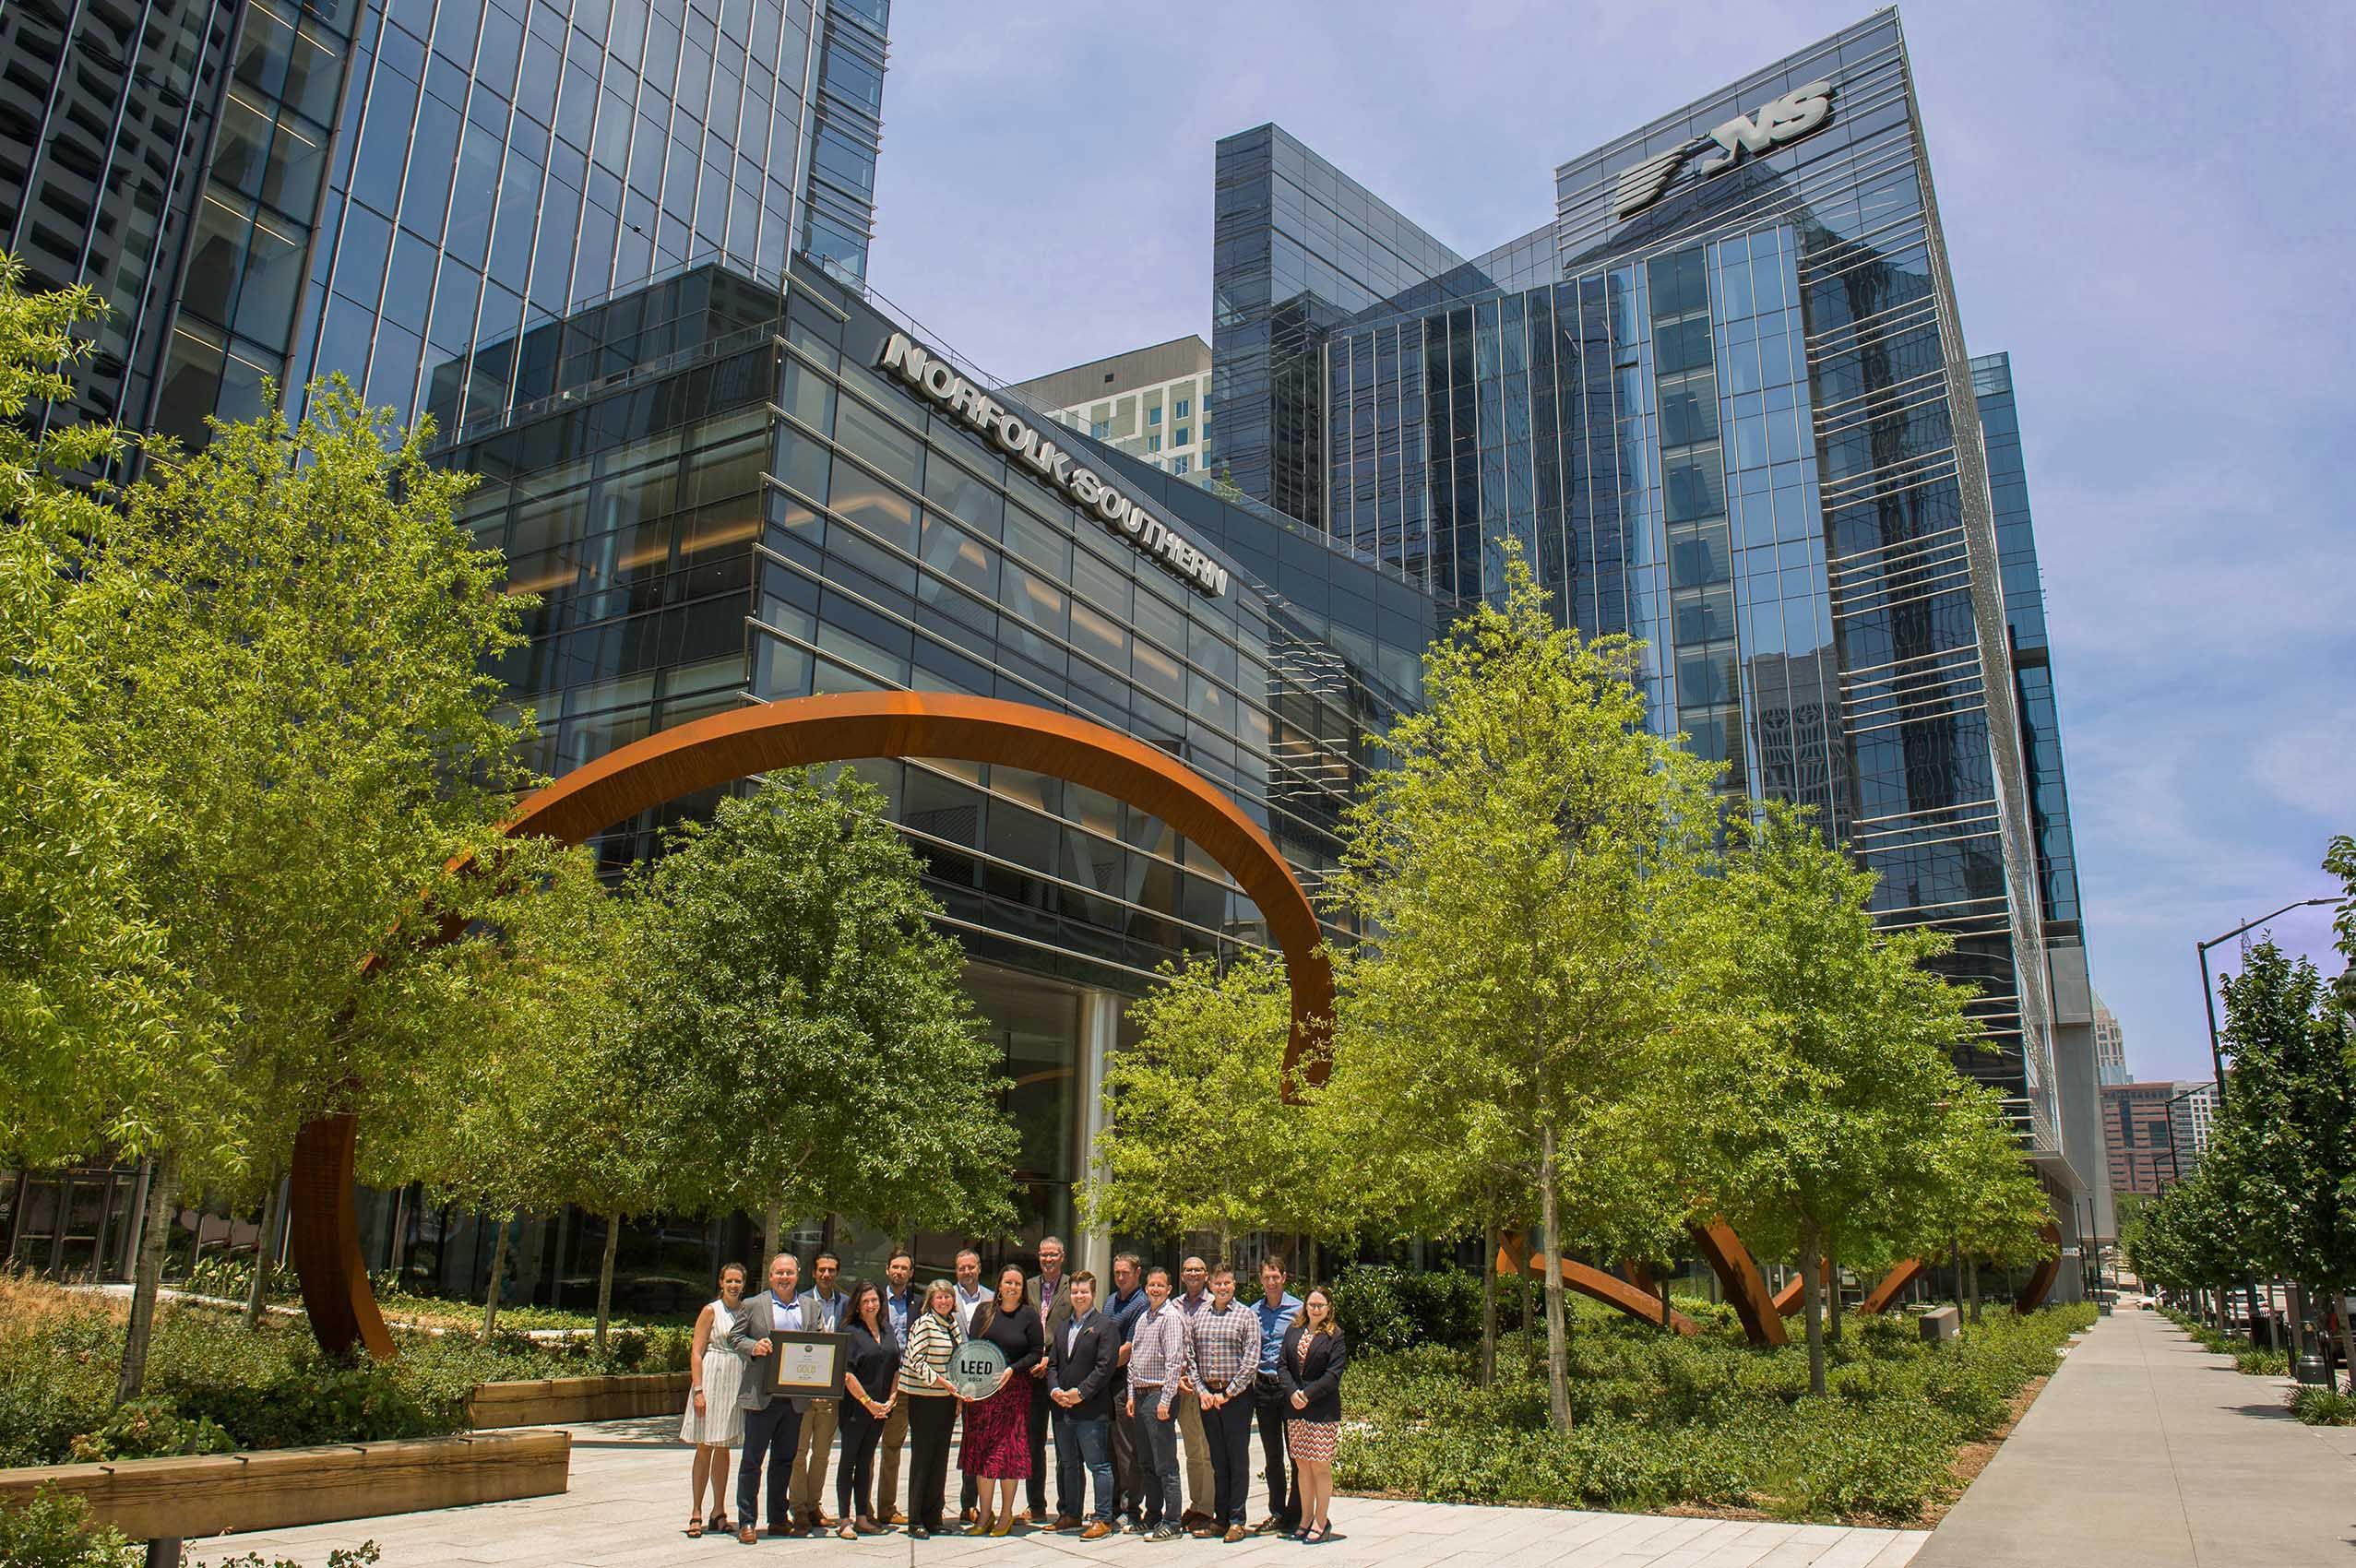 Atlanta Corporate and Business Photos